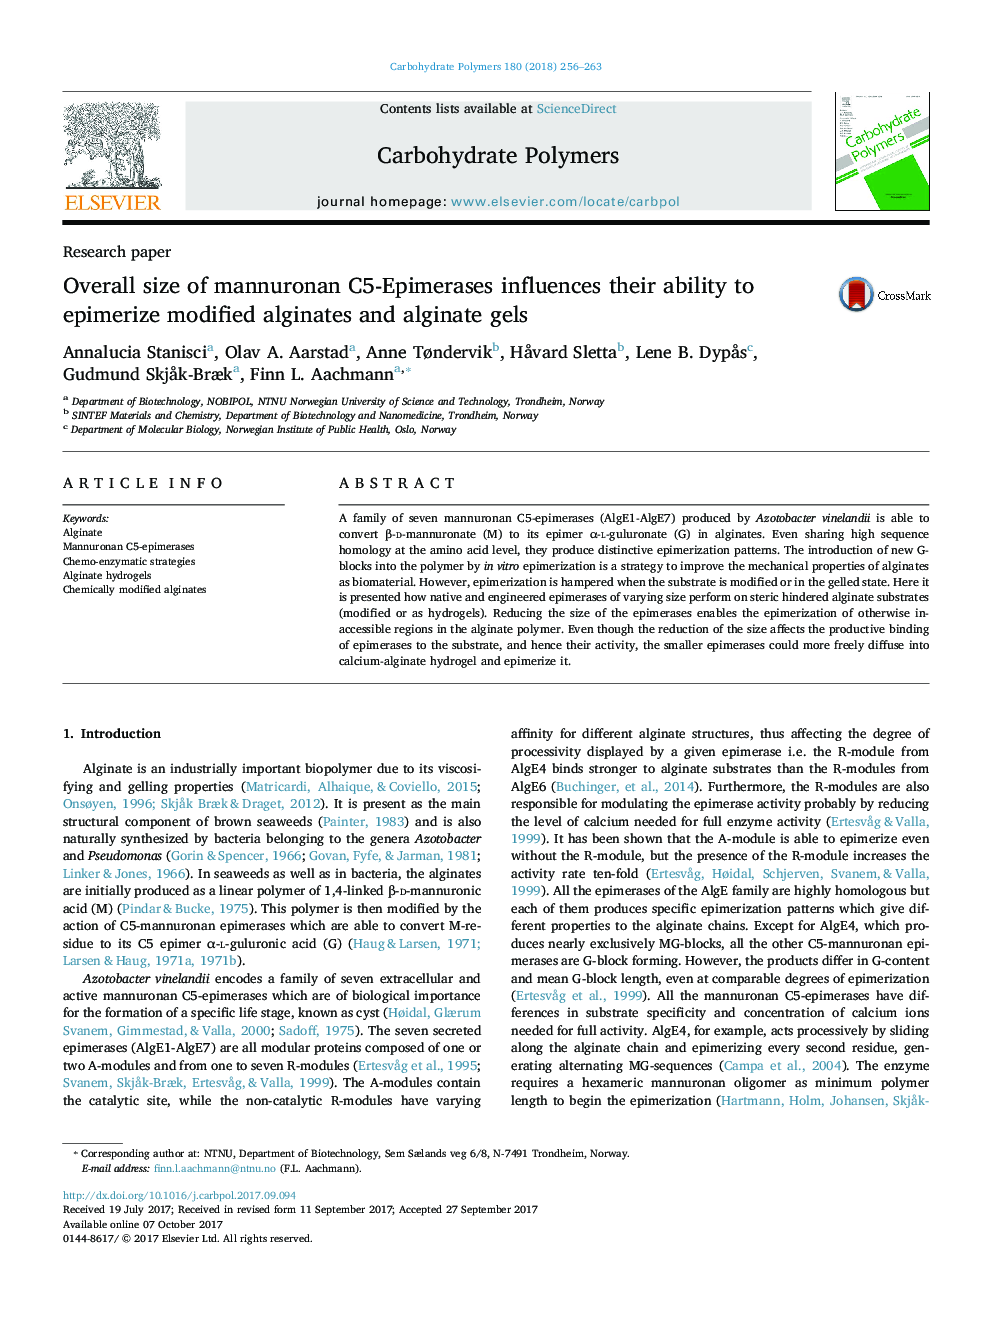 Overall size of mannuronan C5-Epimerases influences their ability to epimerize modified alginates and alginate gels